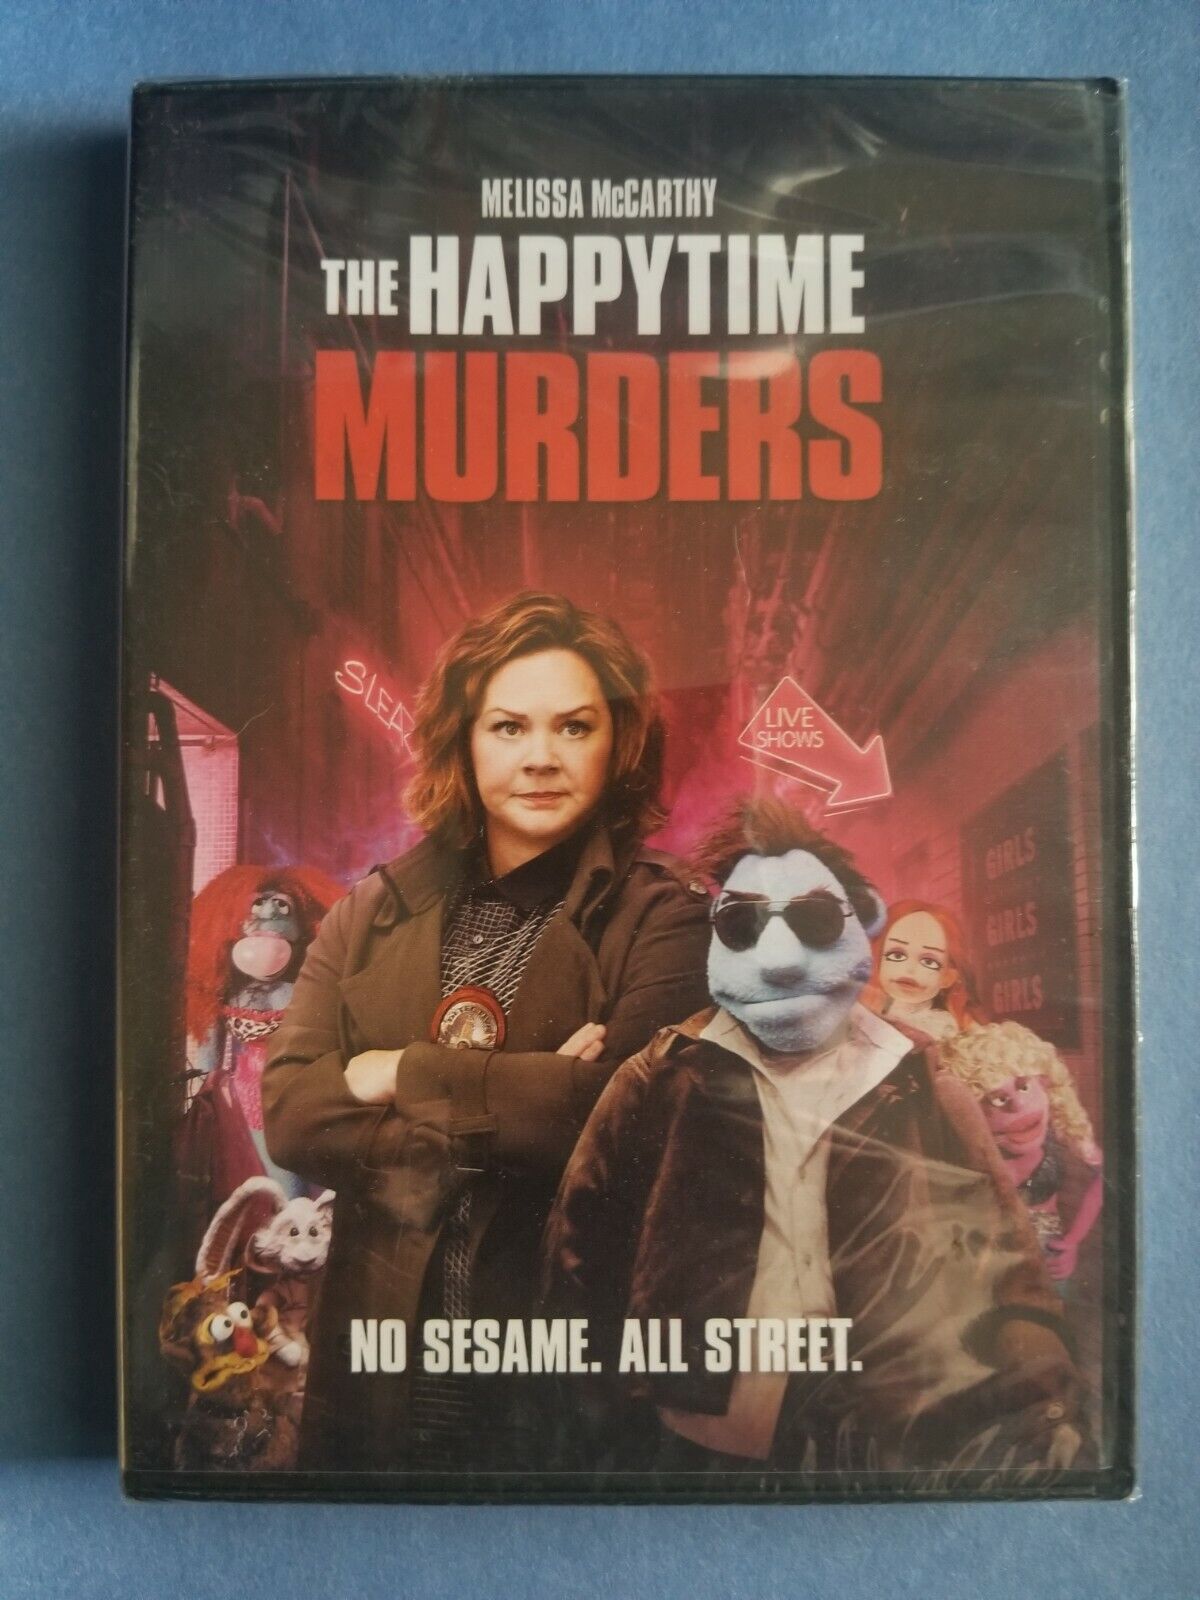 NEW - The Happytime Murders (DVD, 2018) Melissa McCarthy - Free ShipN!